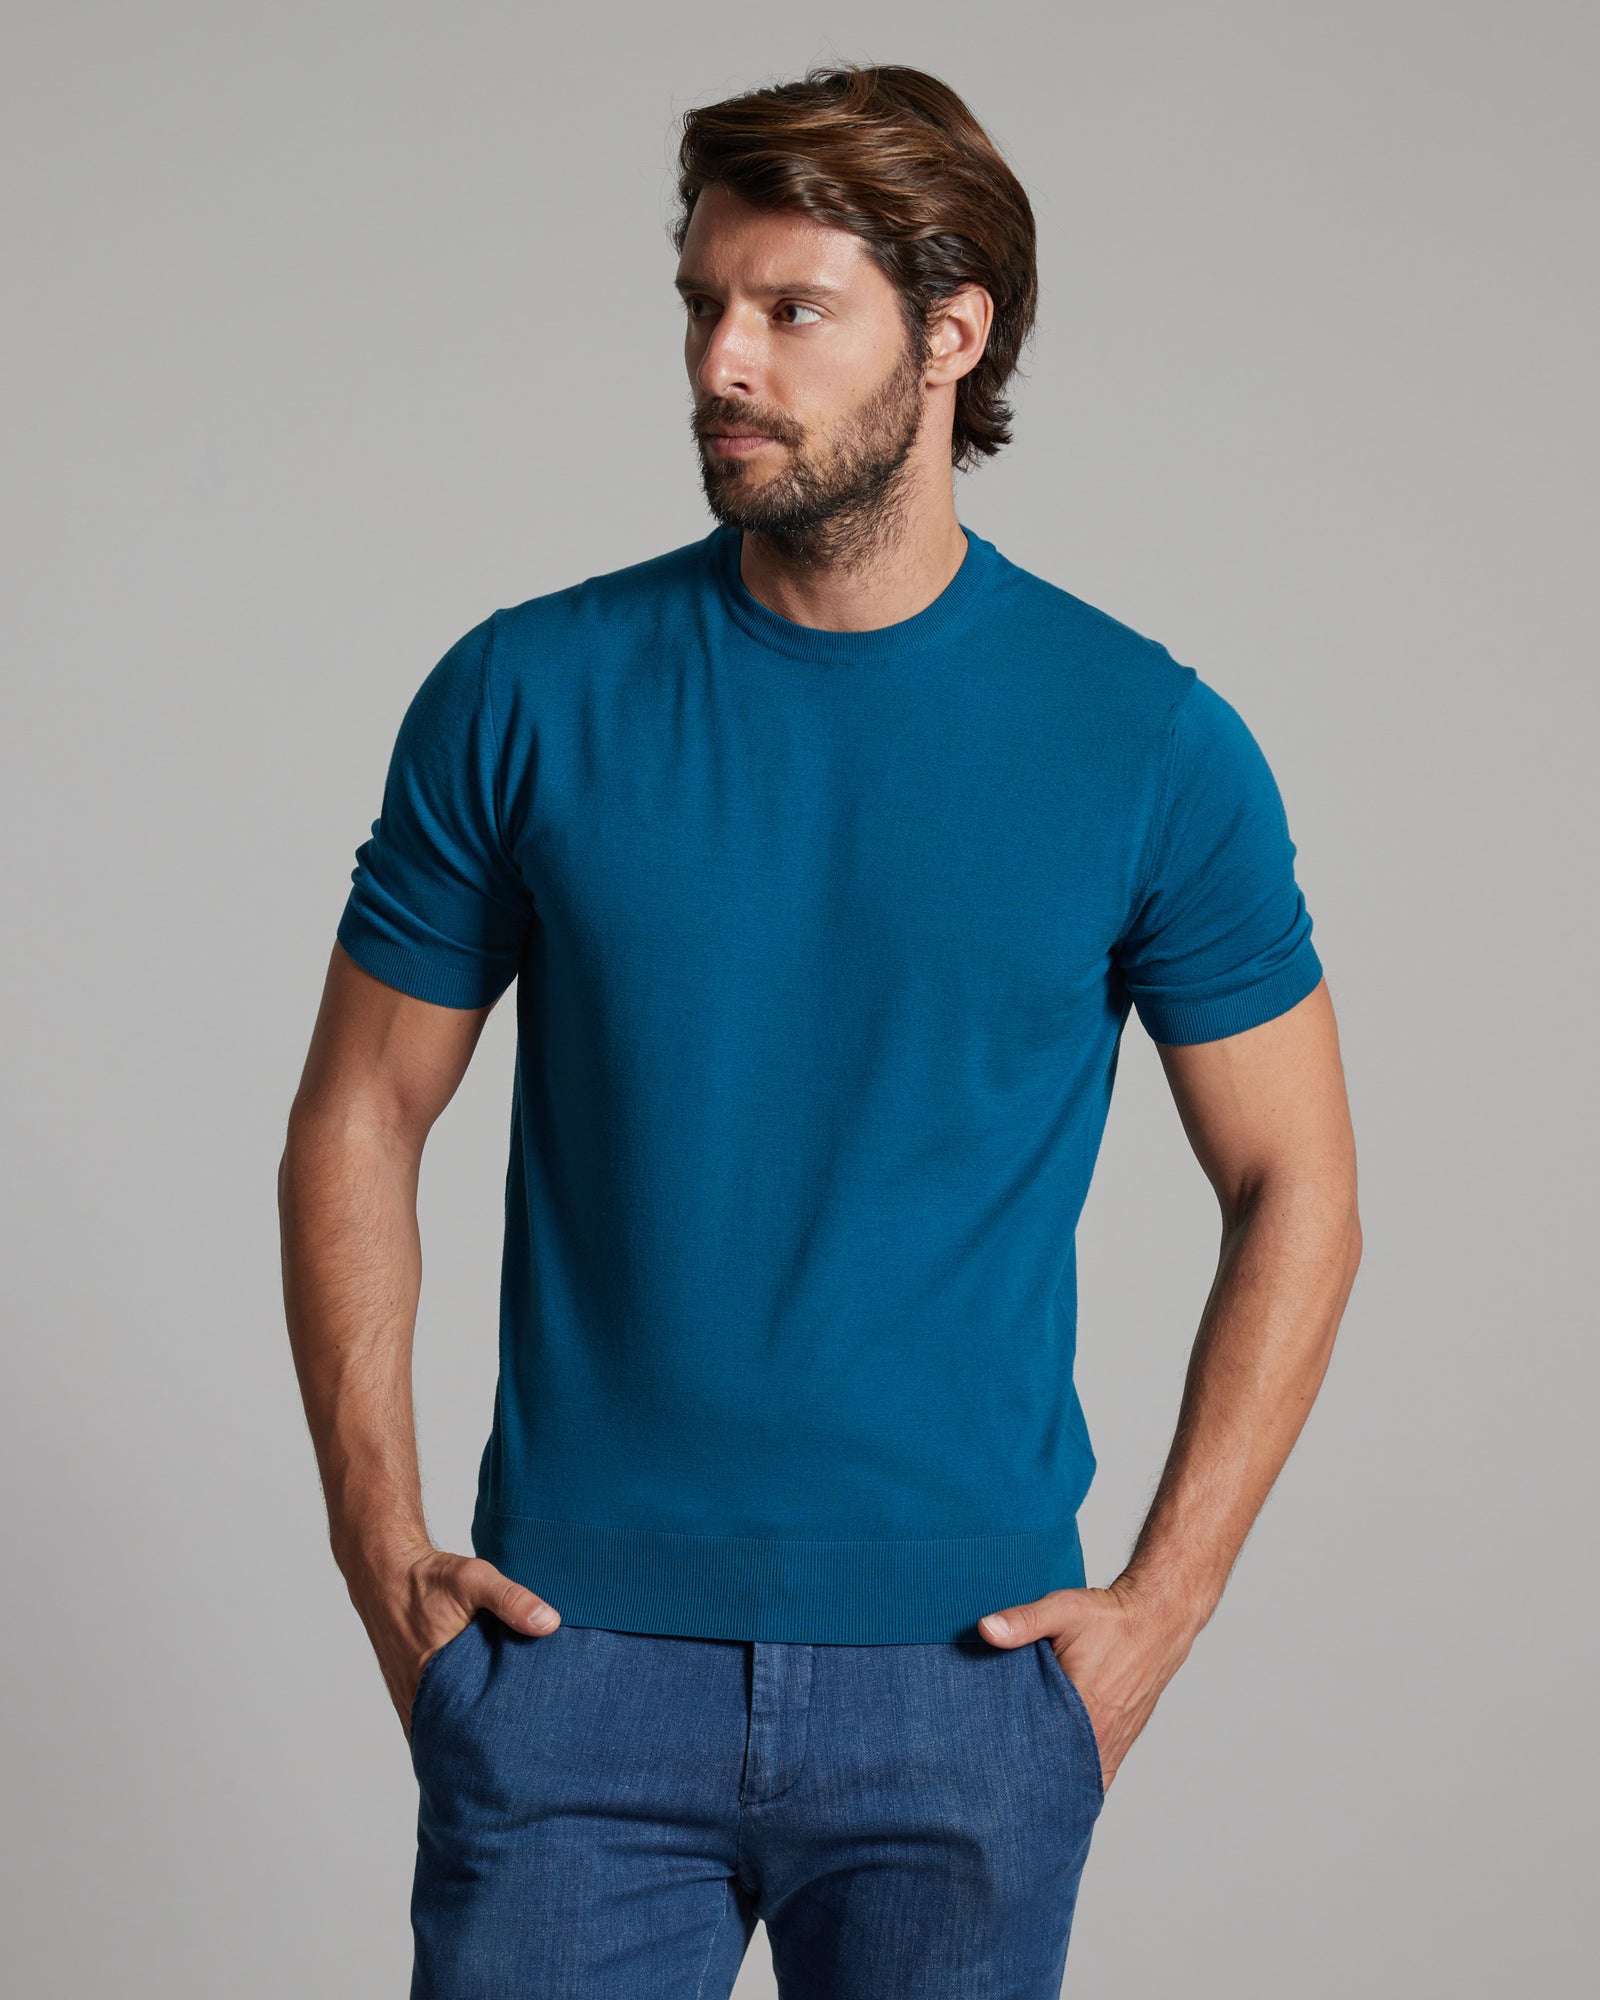 12.8 Kid Wool teal blue T-shirt sweater